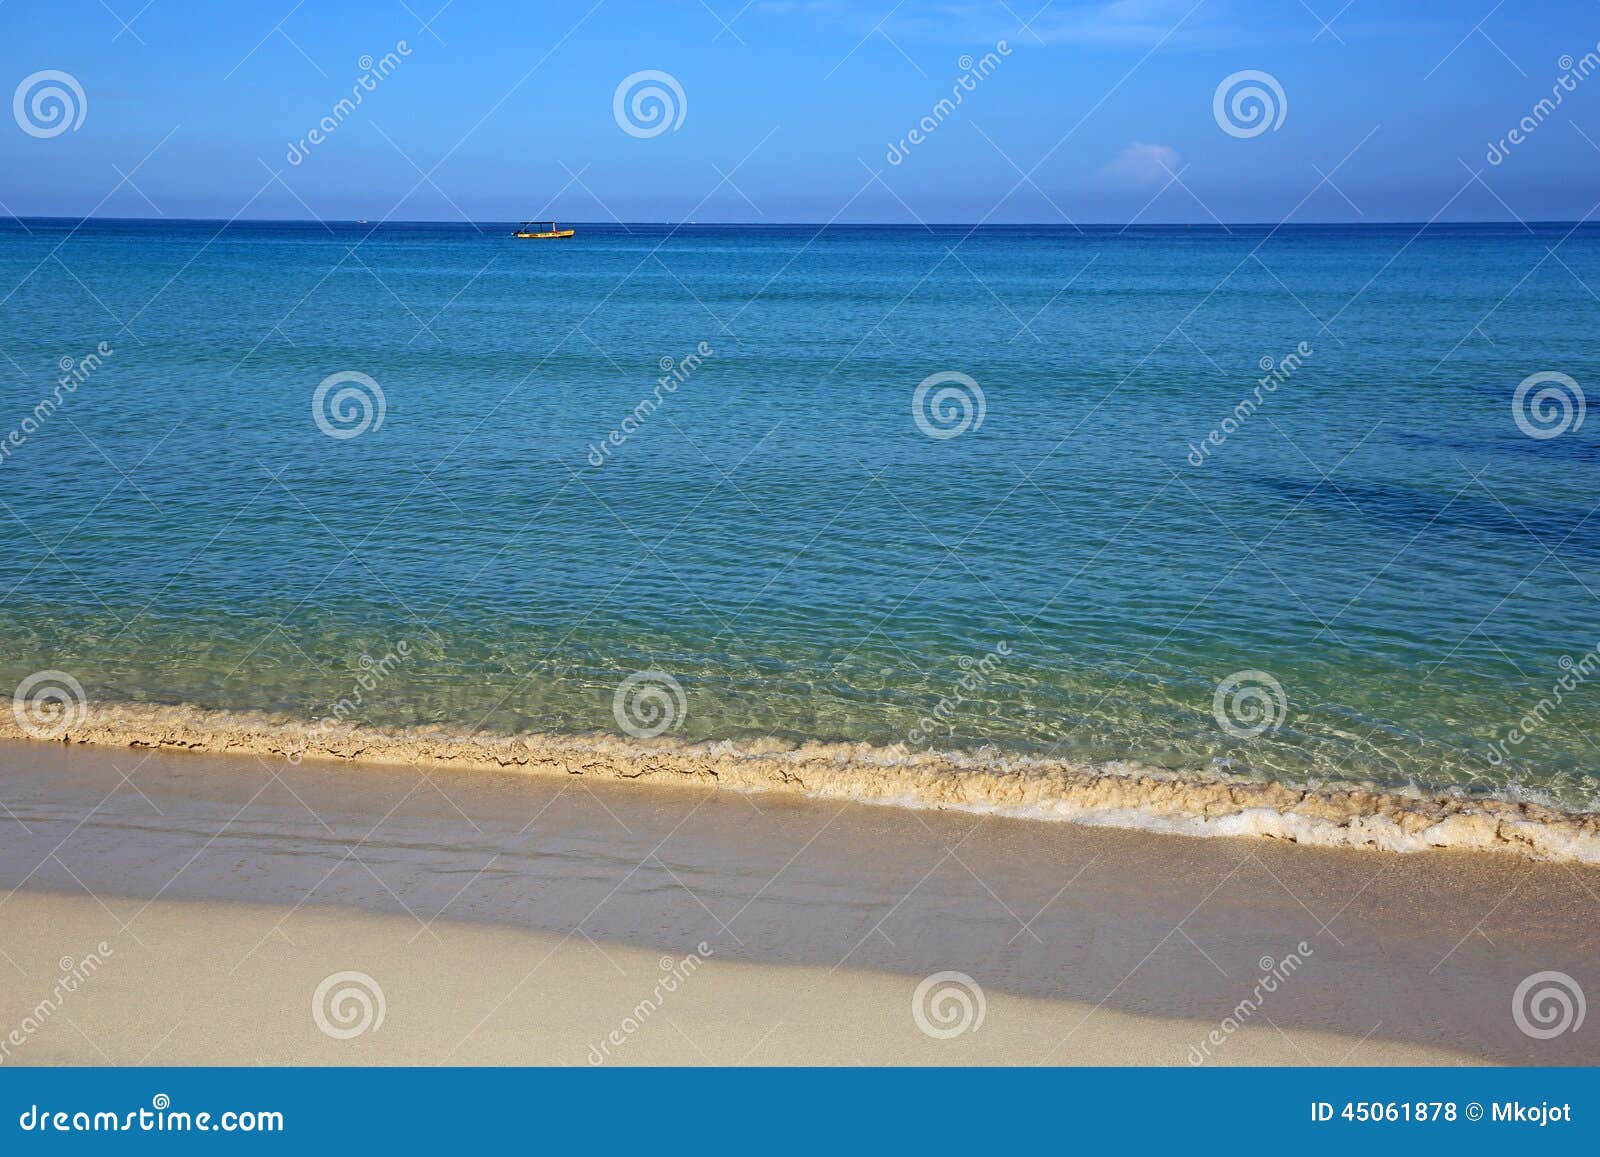 Landscape on the beach, JamaicaScenic on Caribbean Sea in Jamaica.